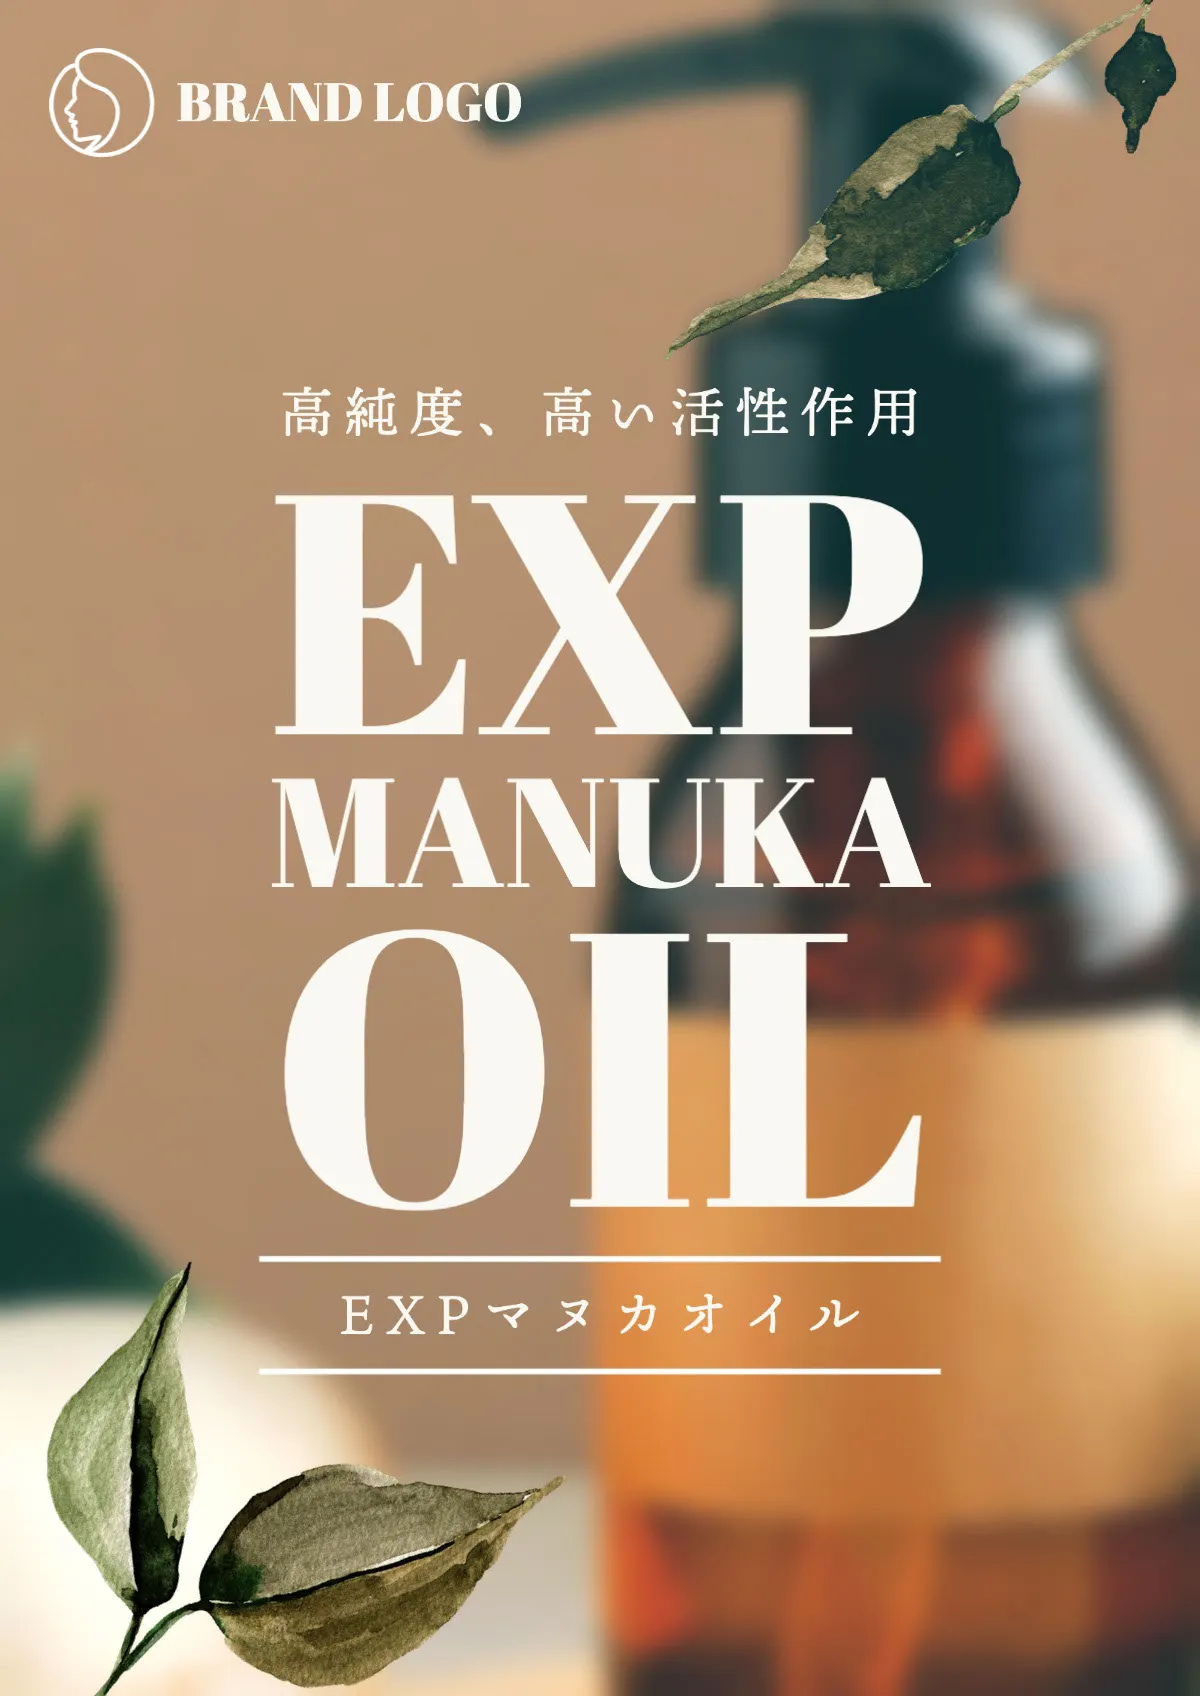 promotion of manuka oil poster